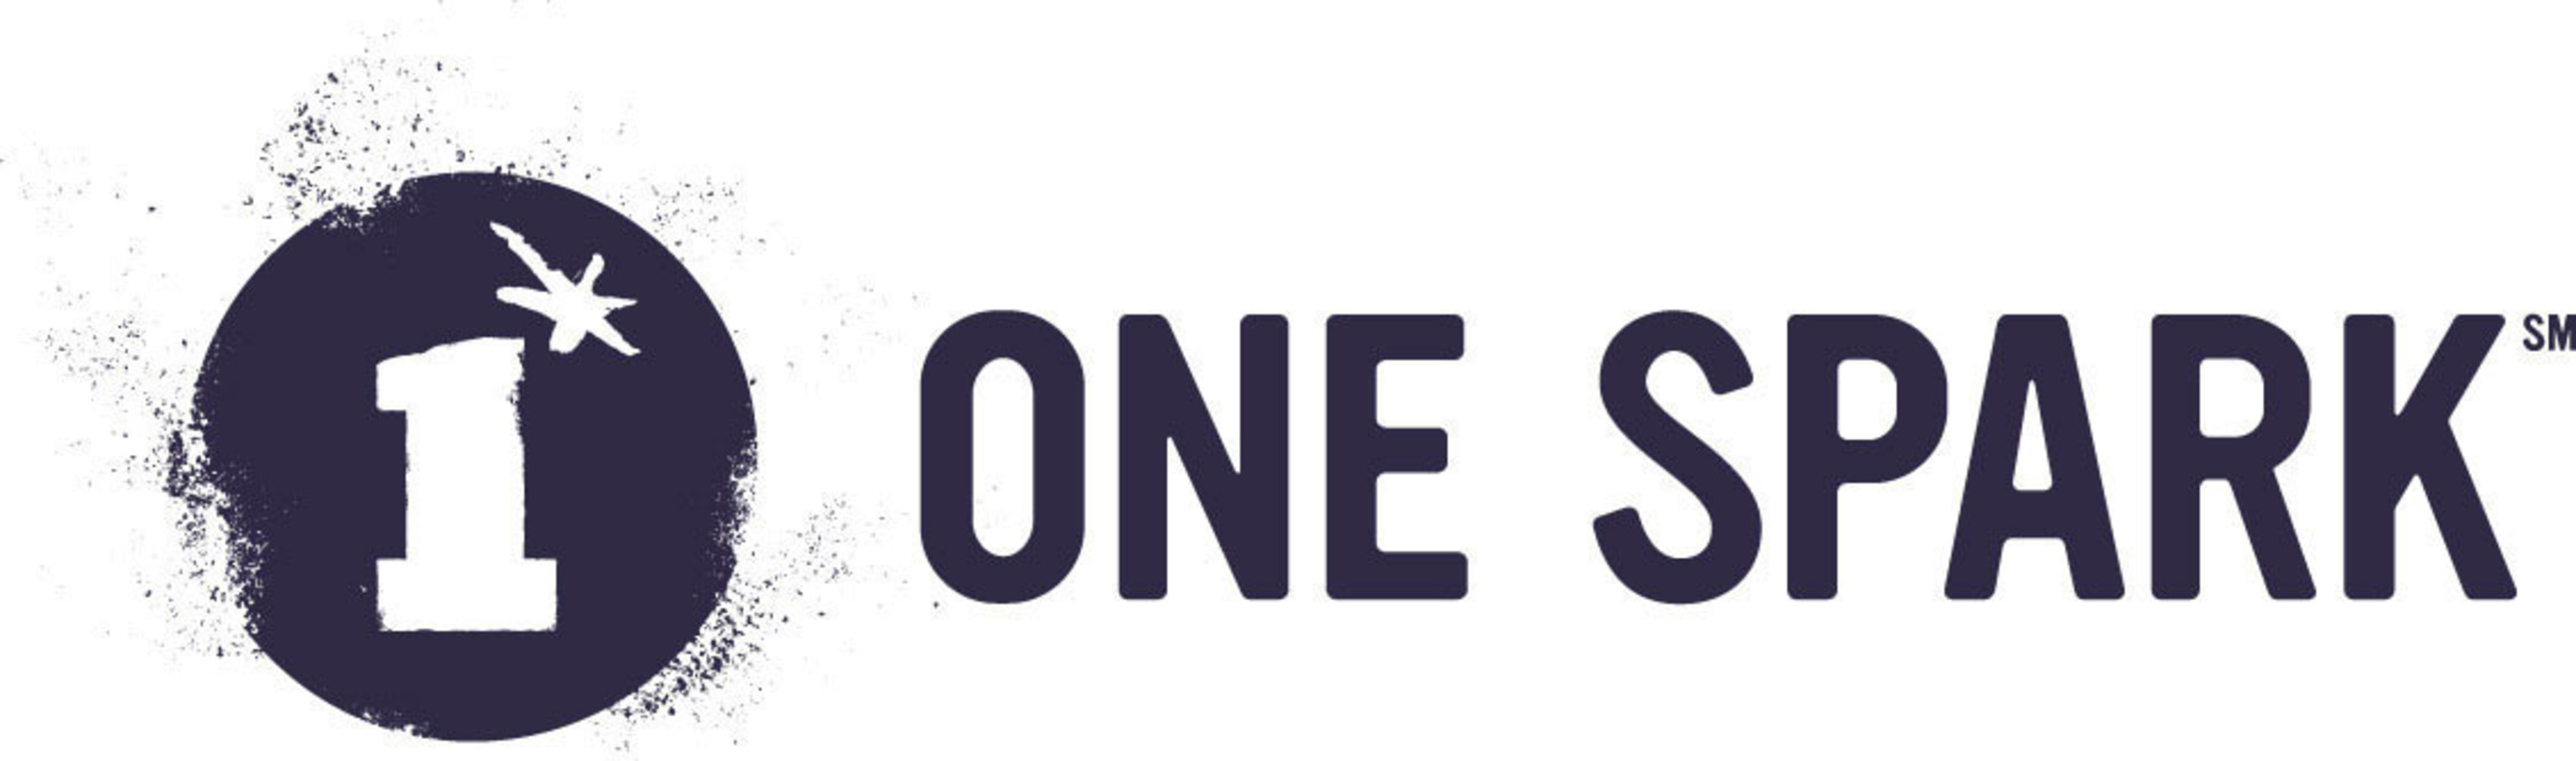 One Spark Logo. (PRNewsFoto/One Spark, Inc.) (PRNewsFoto/ONE SPARK, INC.)